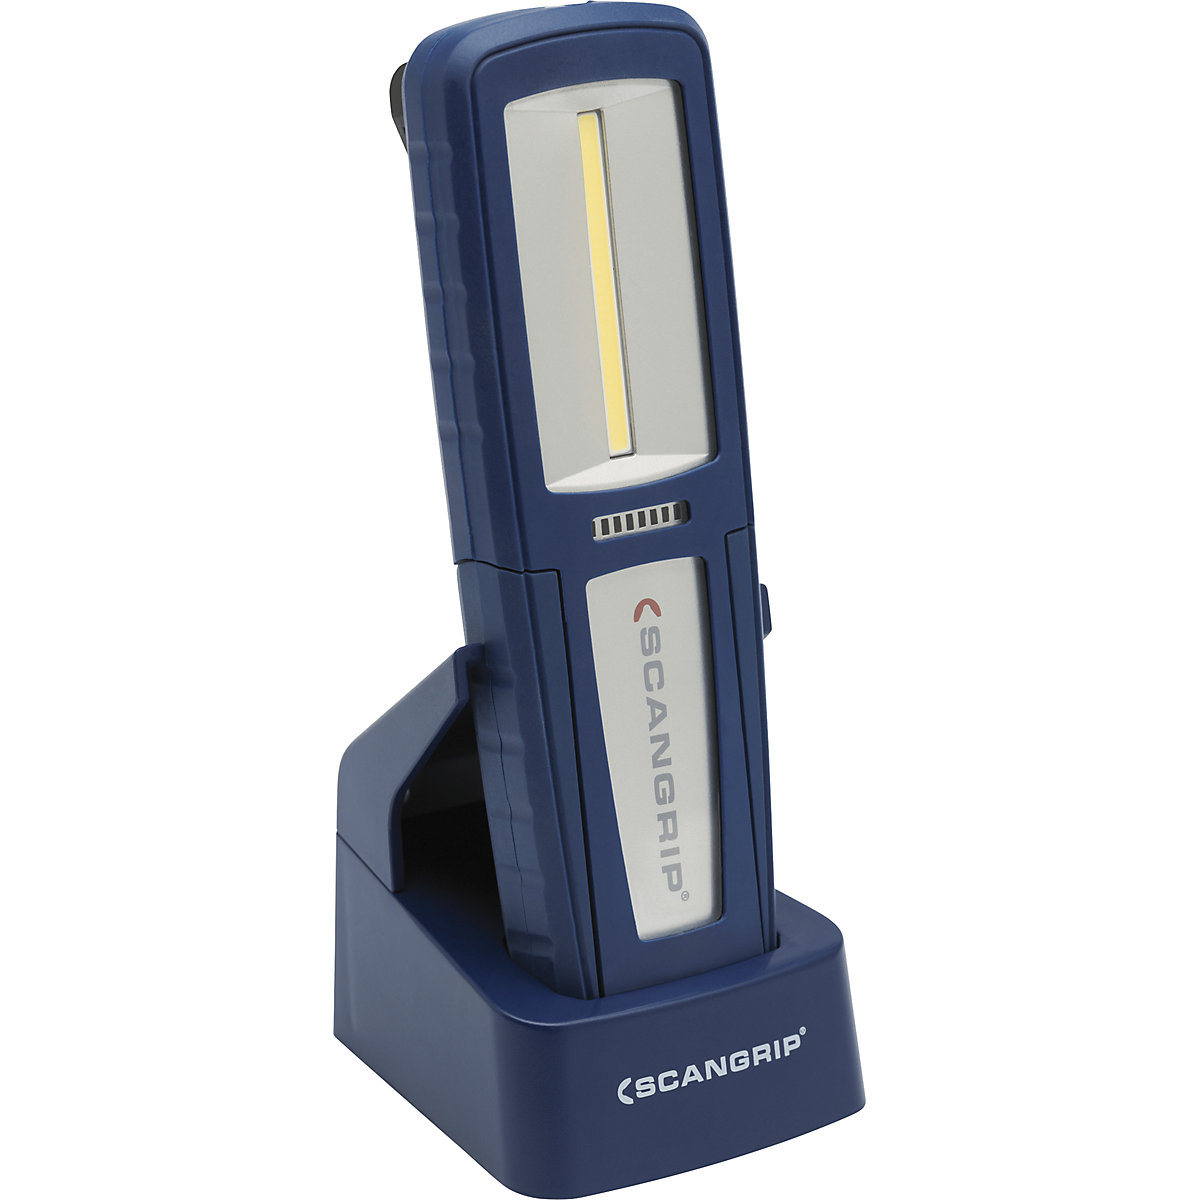 Lampada portatile a LED UNIFORM – SCANGRIP